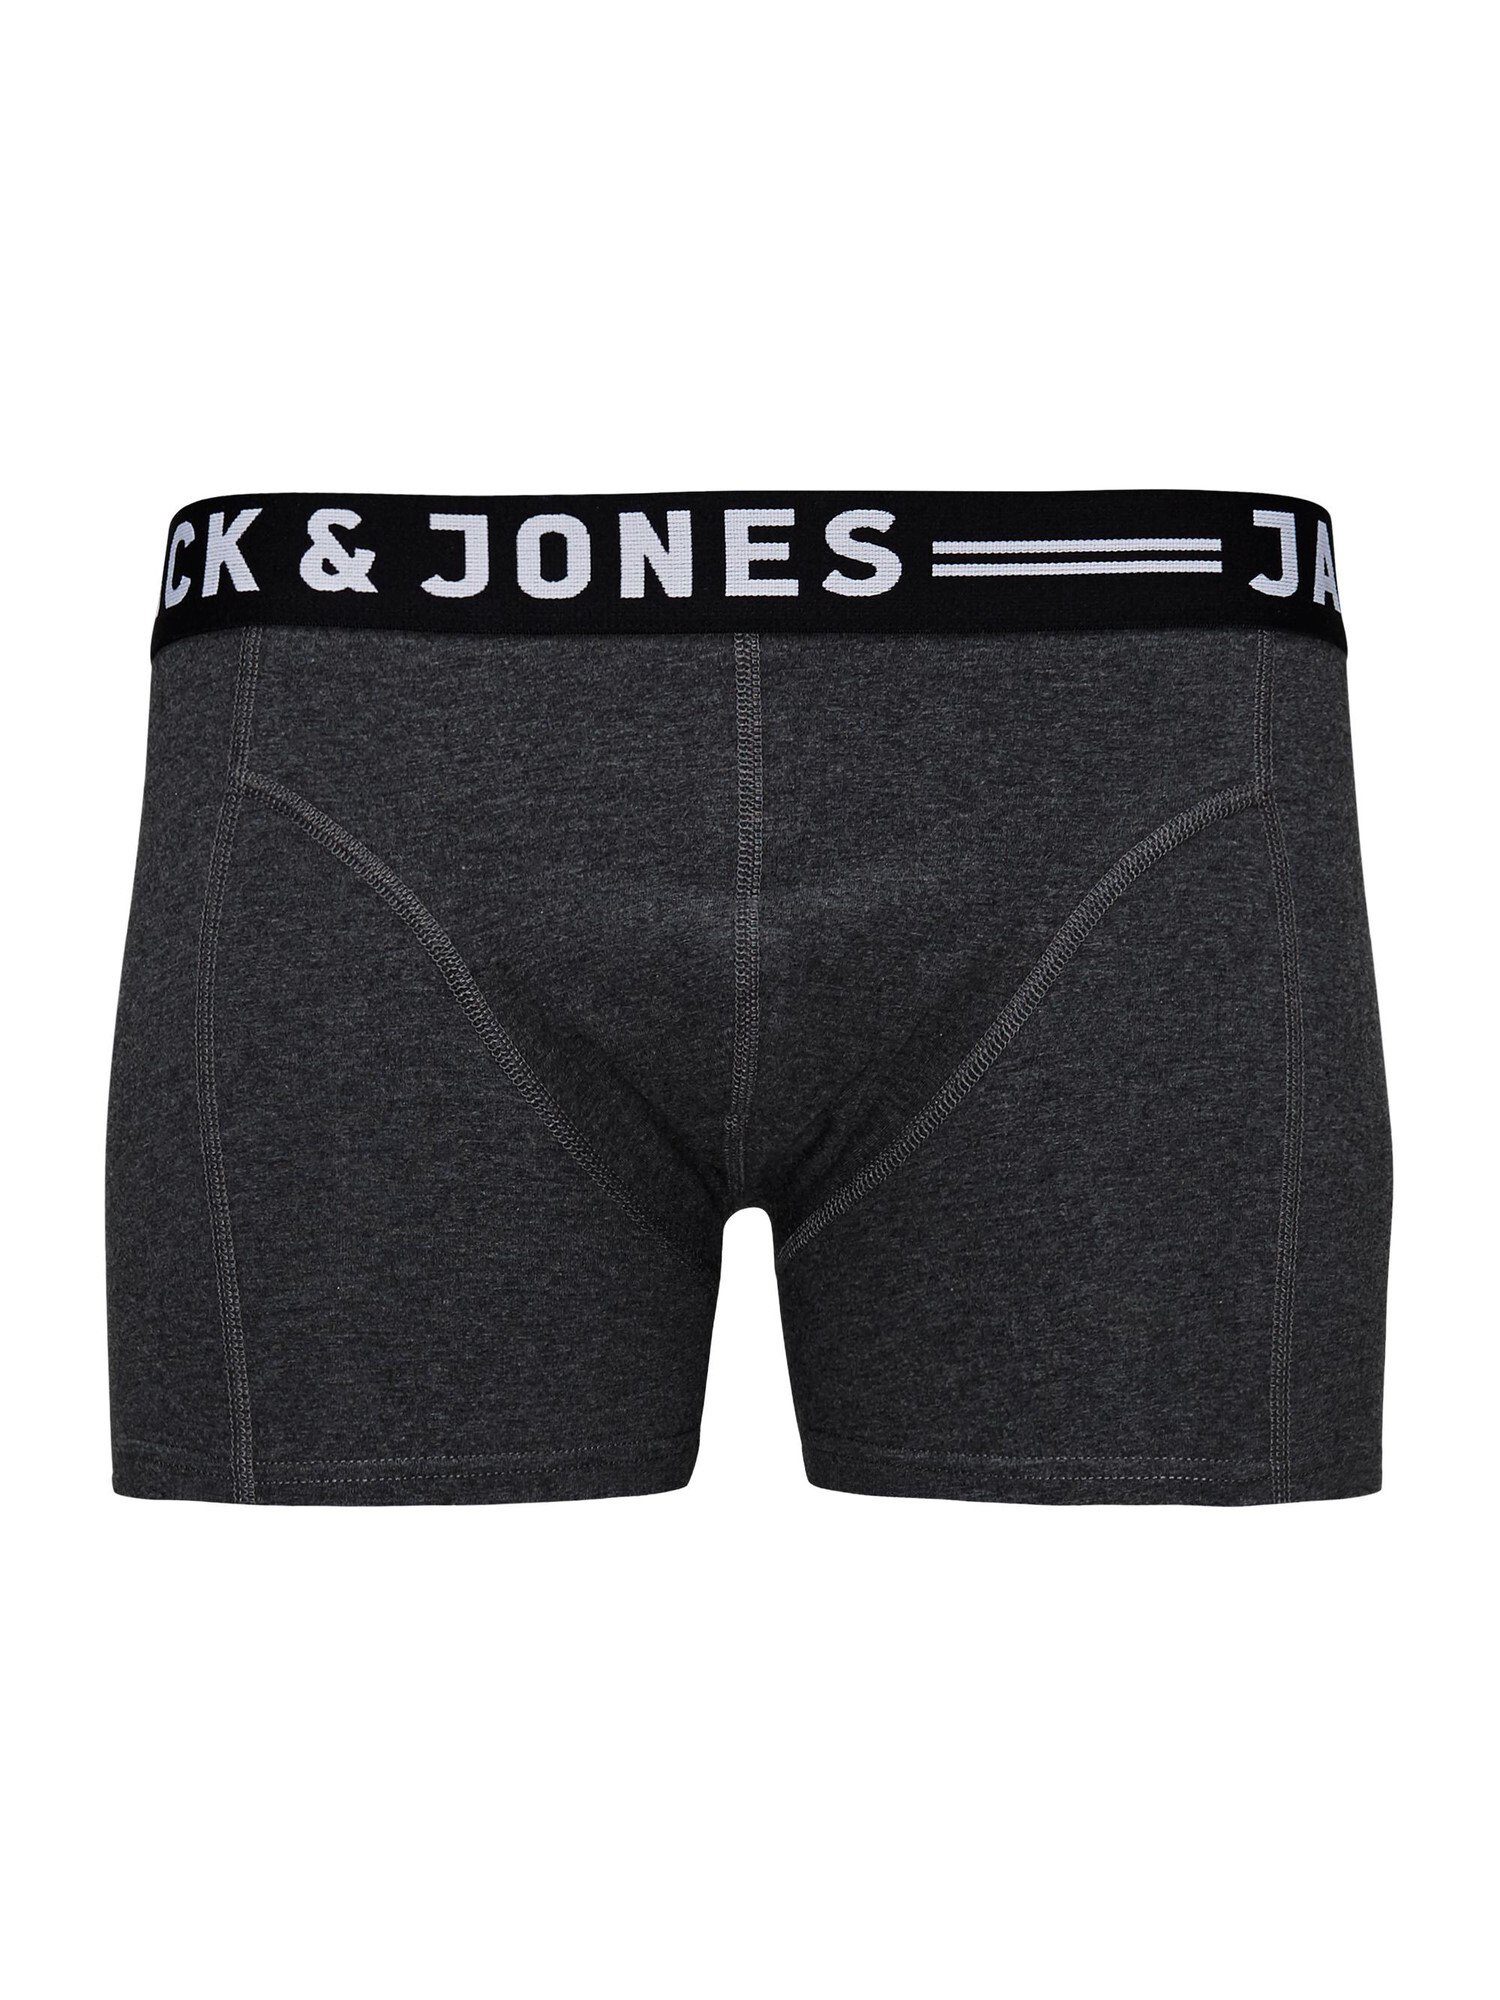 Boxershorts Mix dunkelgrau Color & Jack Unterhose Trunks Jones Sense